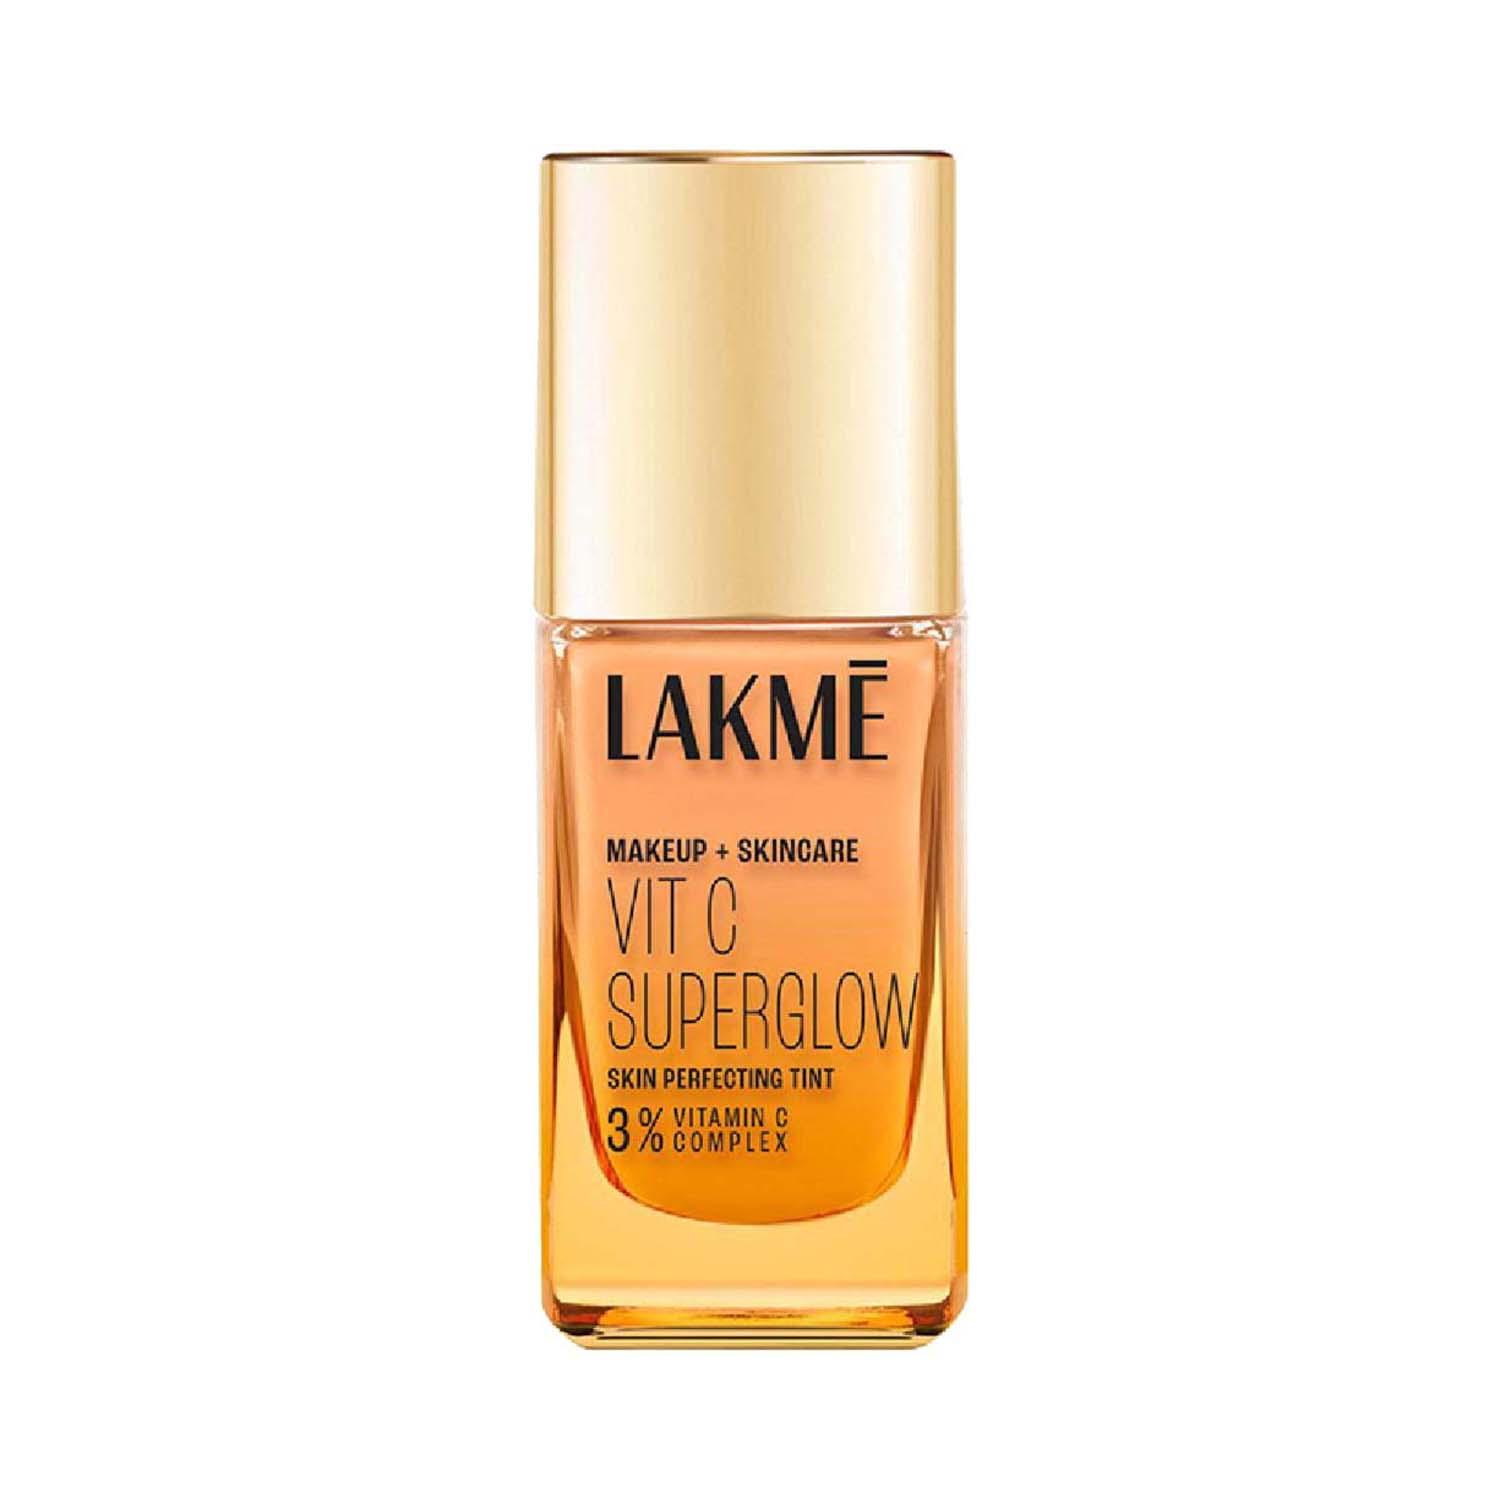 Lakme | Lakme Makeup+Skincare Vit C Superglow Skin Perfecting Tint - Warm Natural W180 (25 ml)